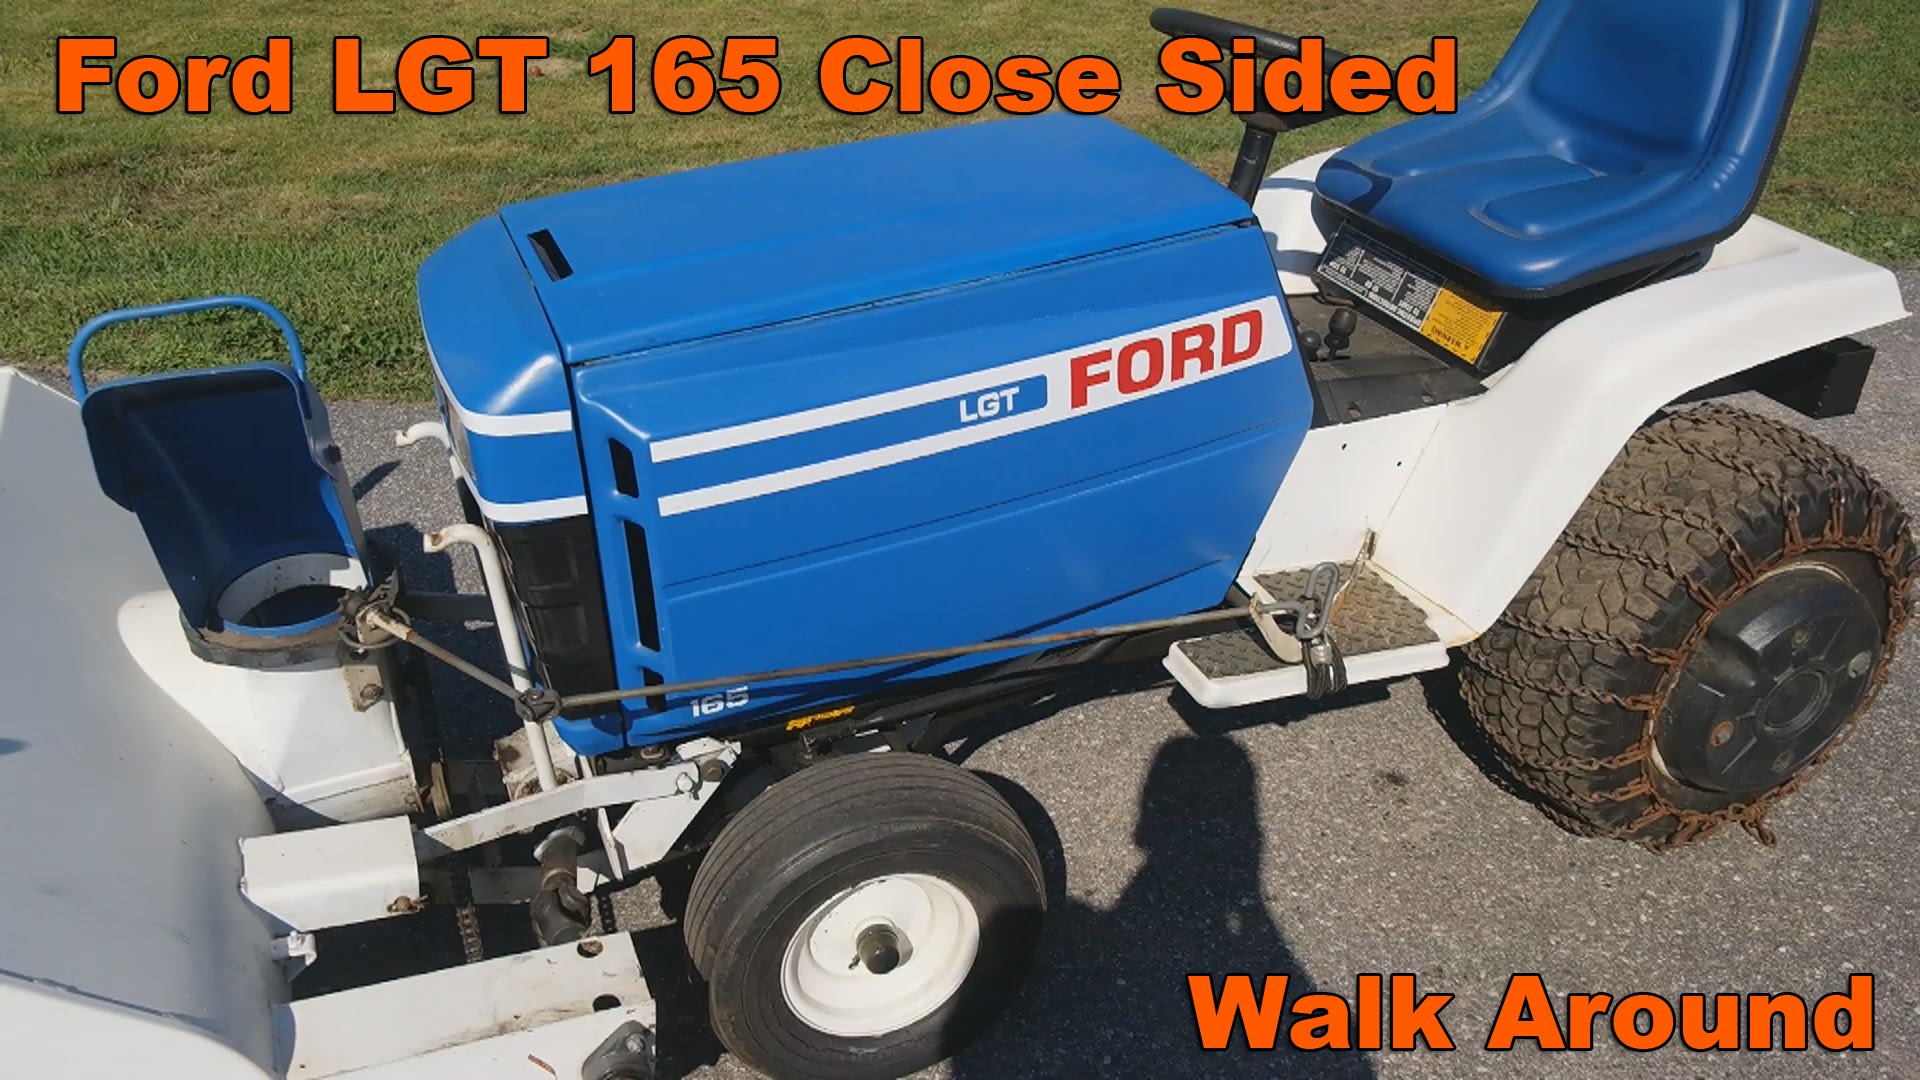 Ford LGT 165 - Walk Around - YouTube